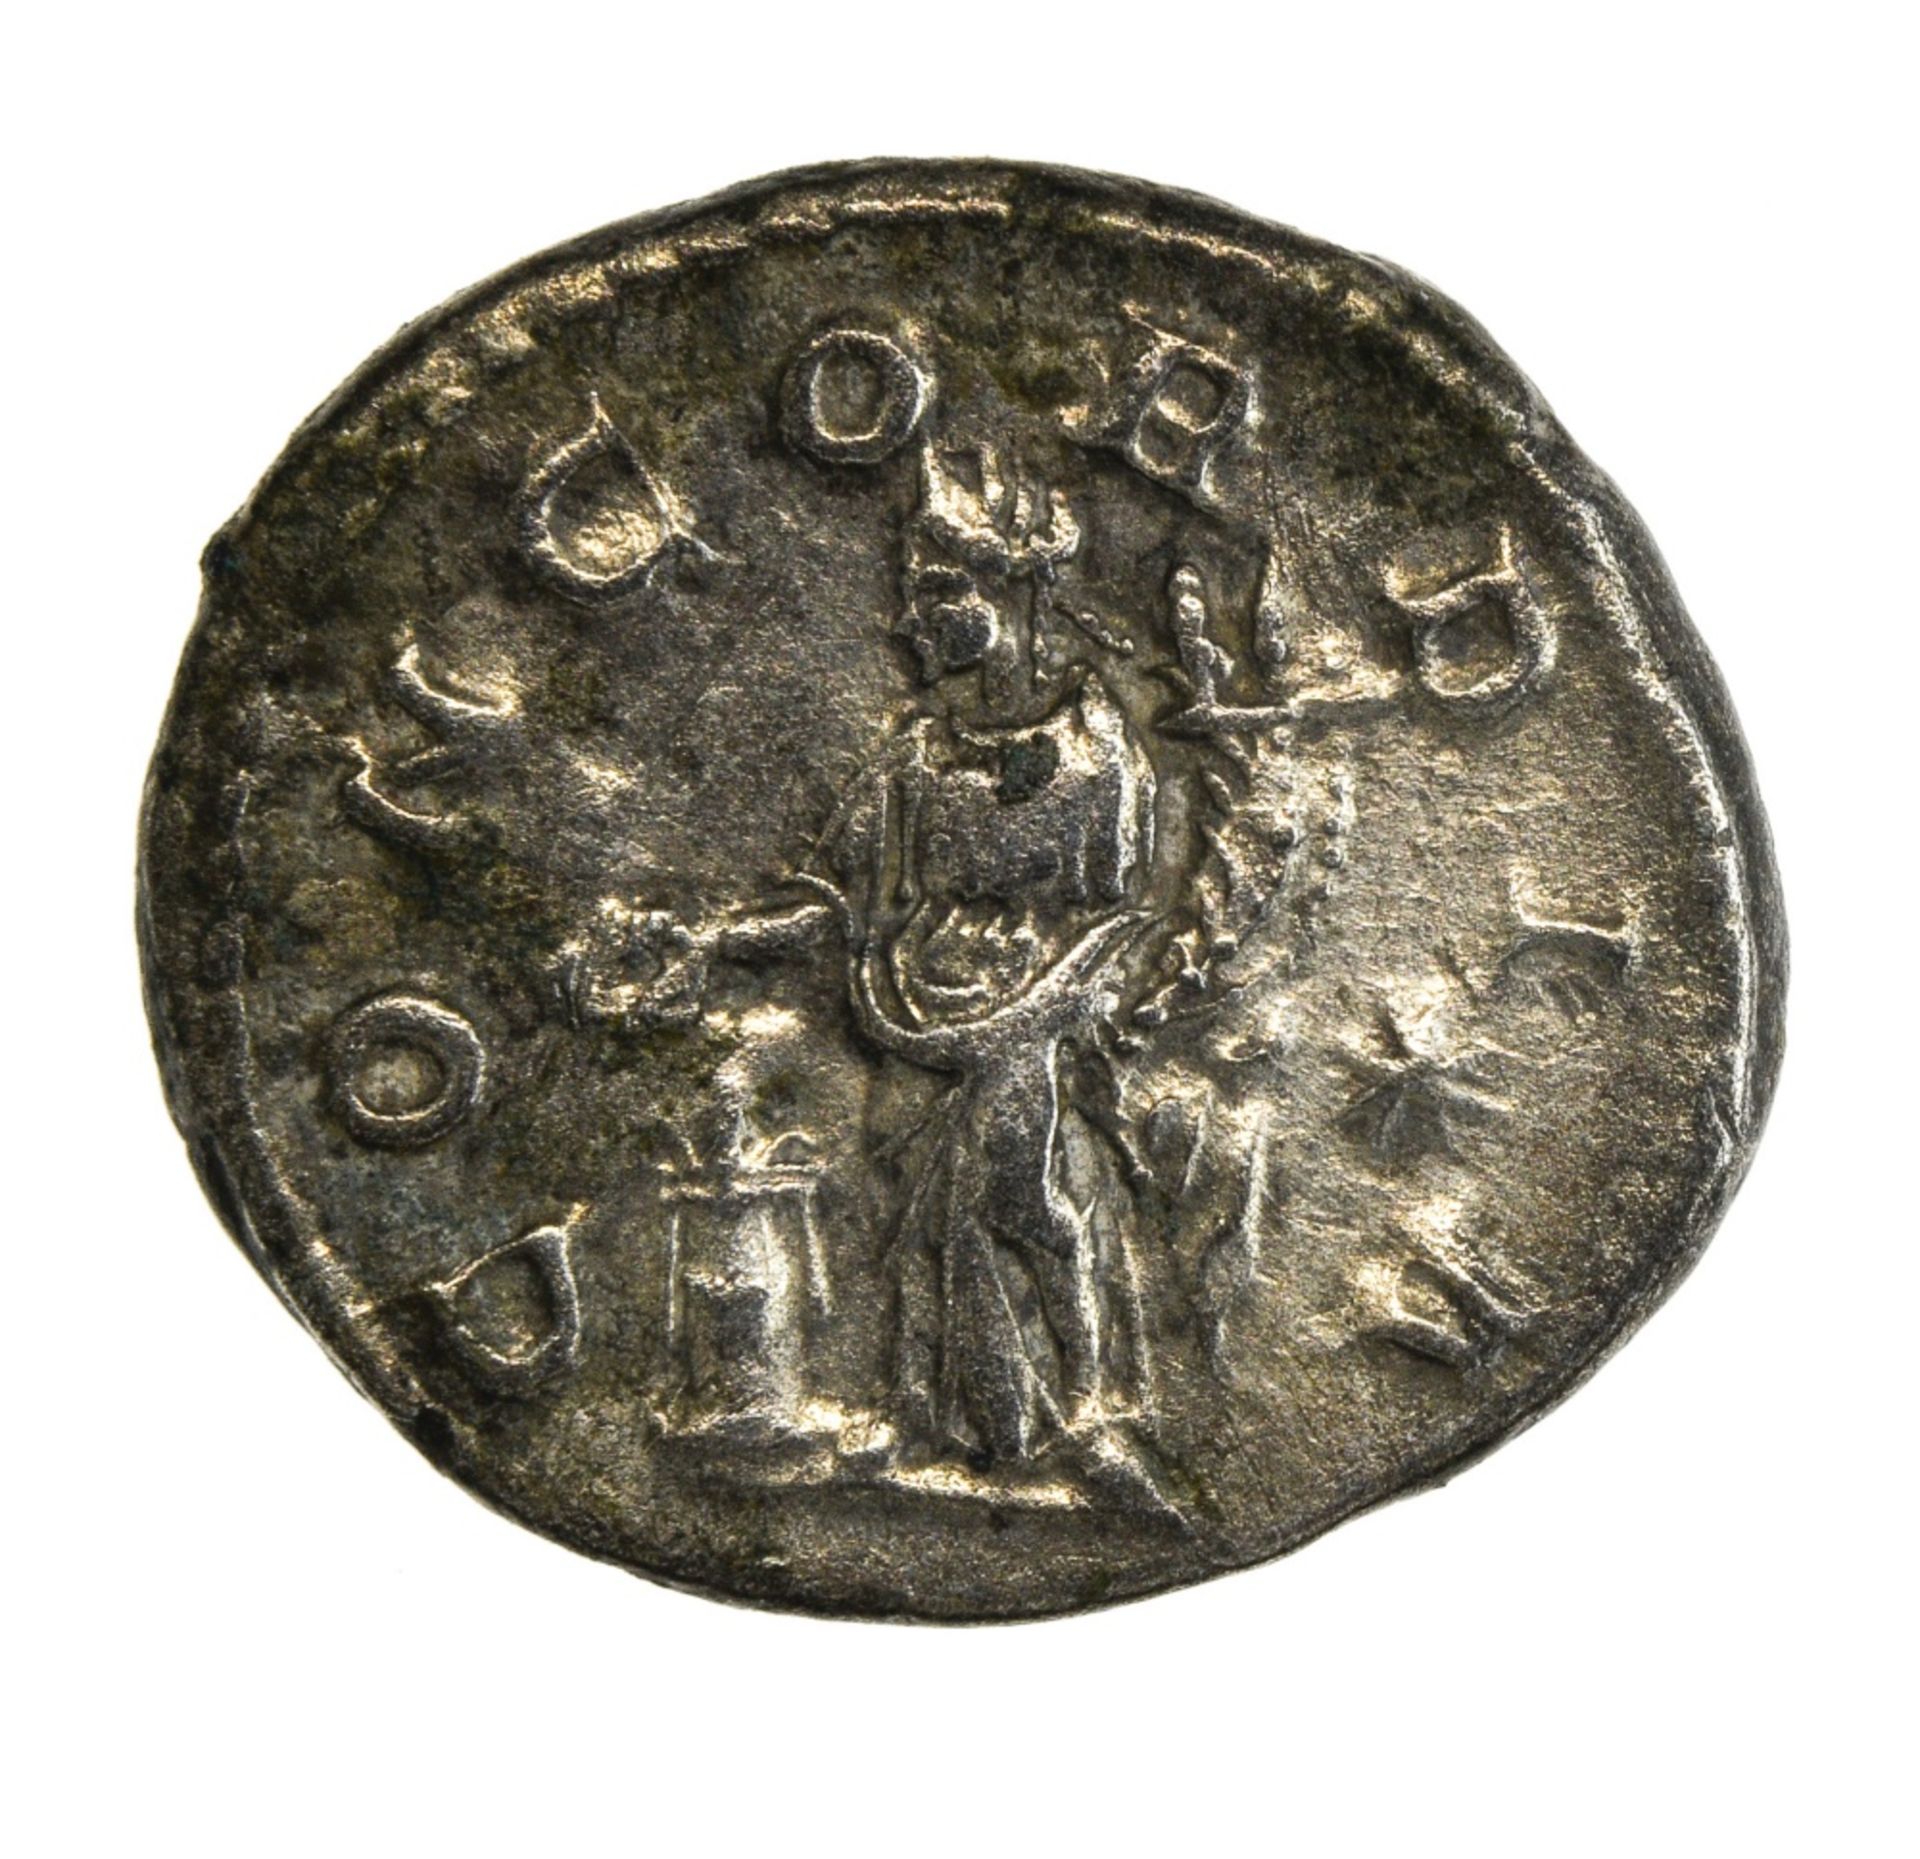 Rome Aquilia Severa (220-221 & 221-222), Denarius, 2.74g, Rome, bust draped right, rev. Concordia - Image 3 of 3